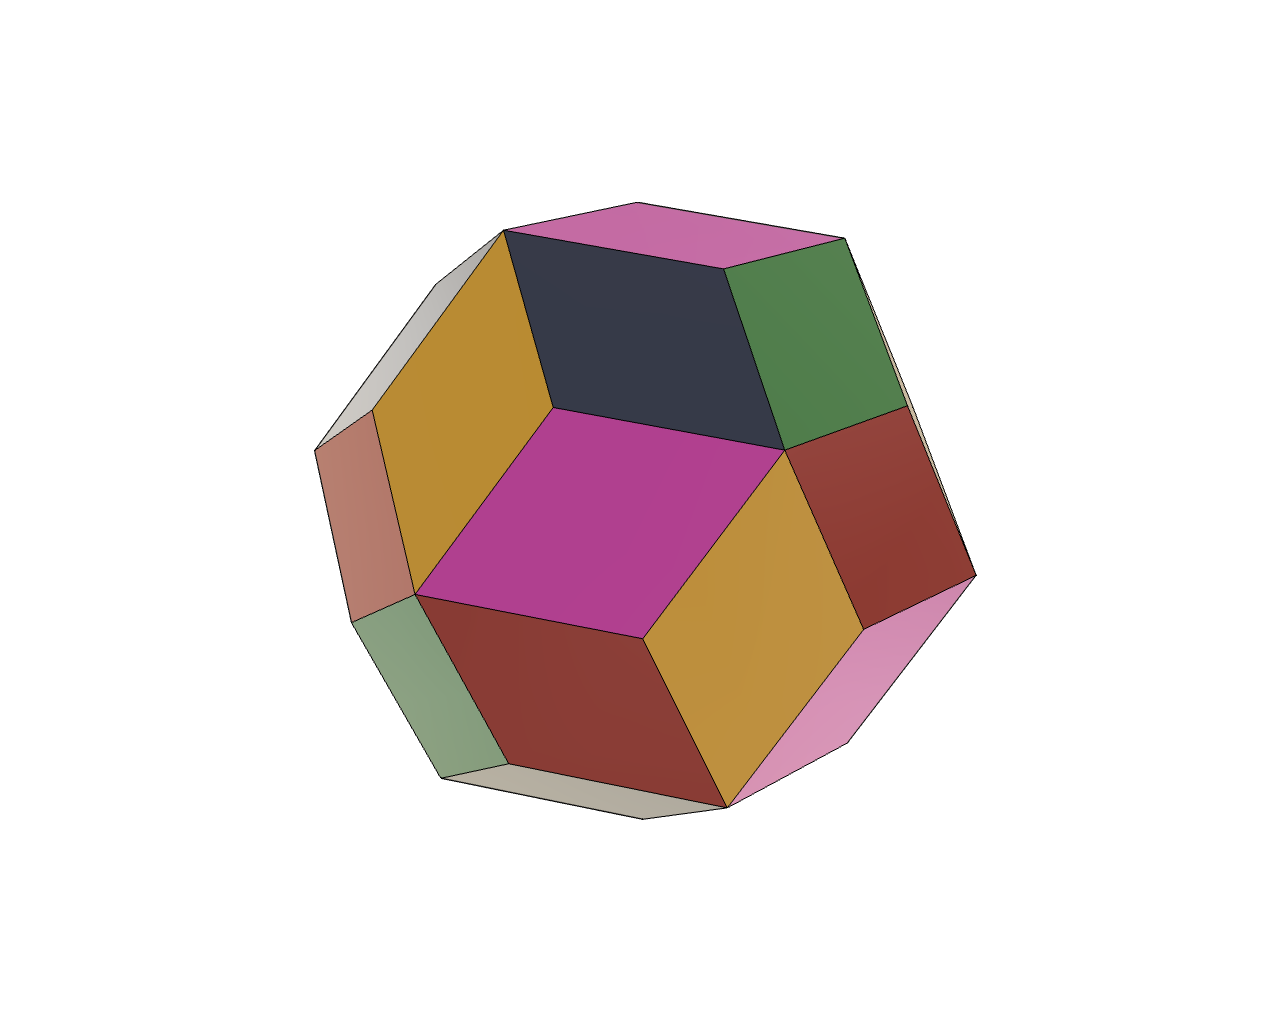 Rhombic Triacontahedron And Spherical Rhombic Triacontahedron